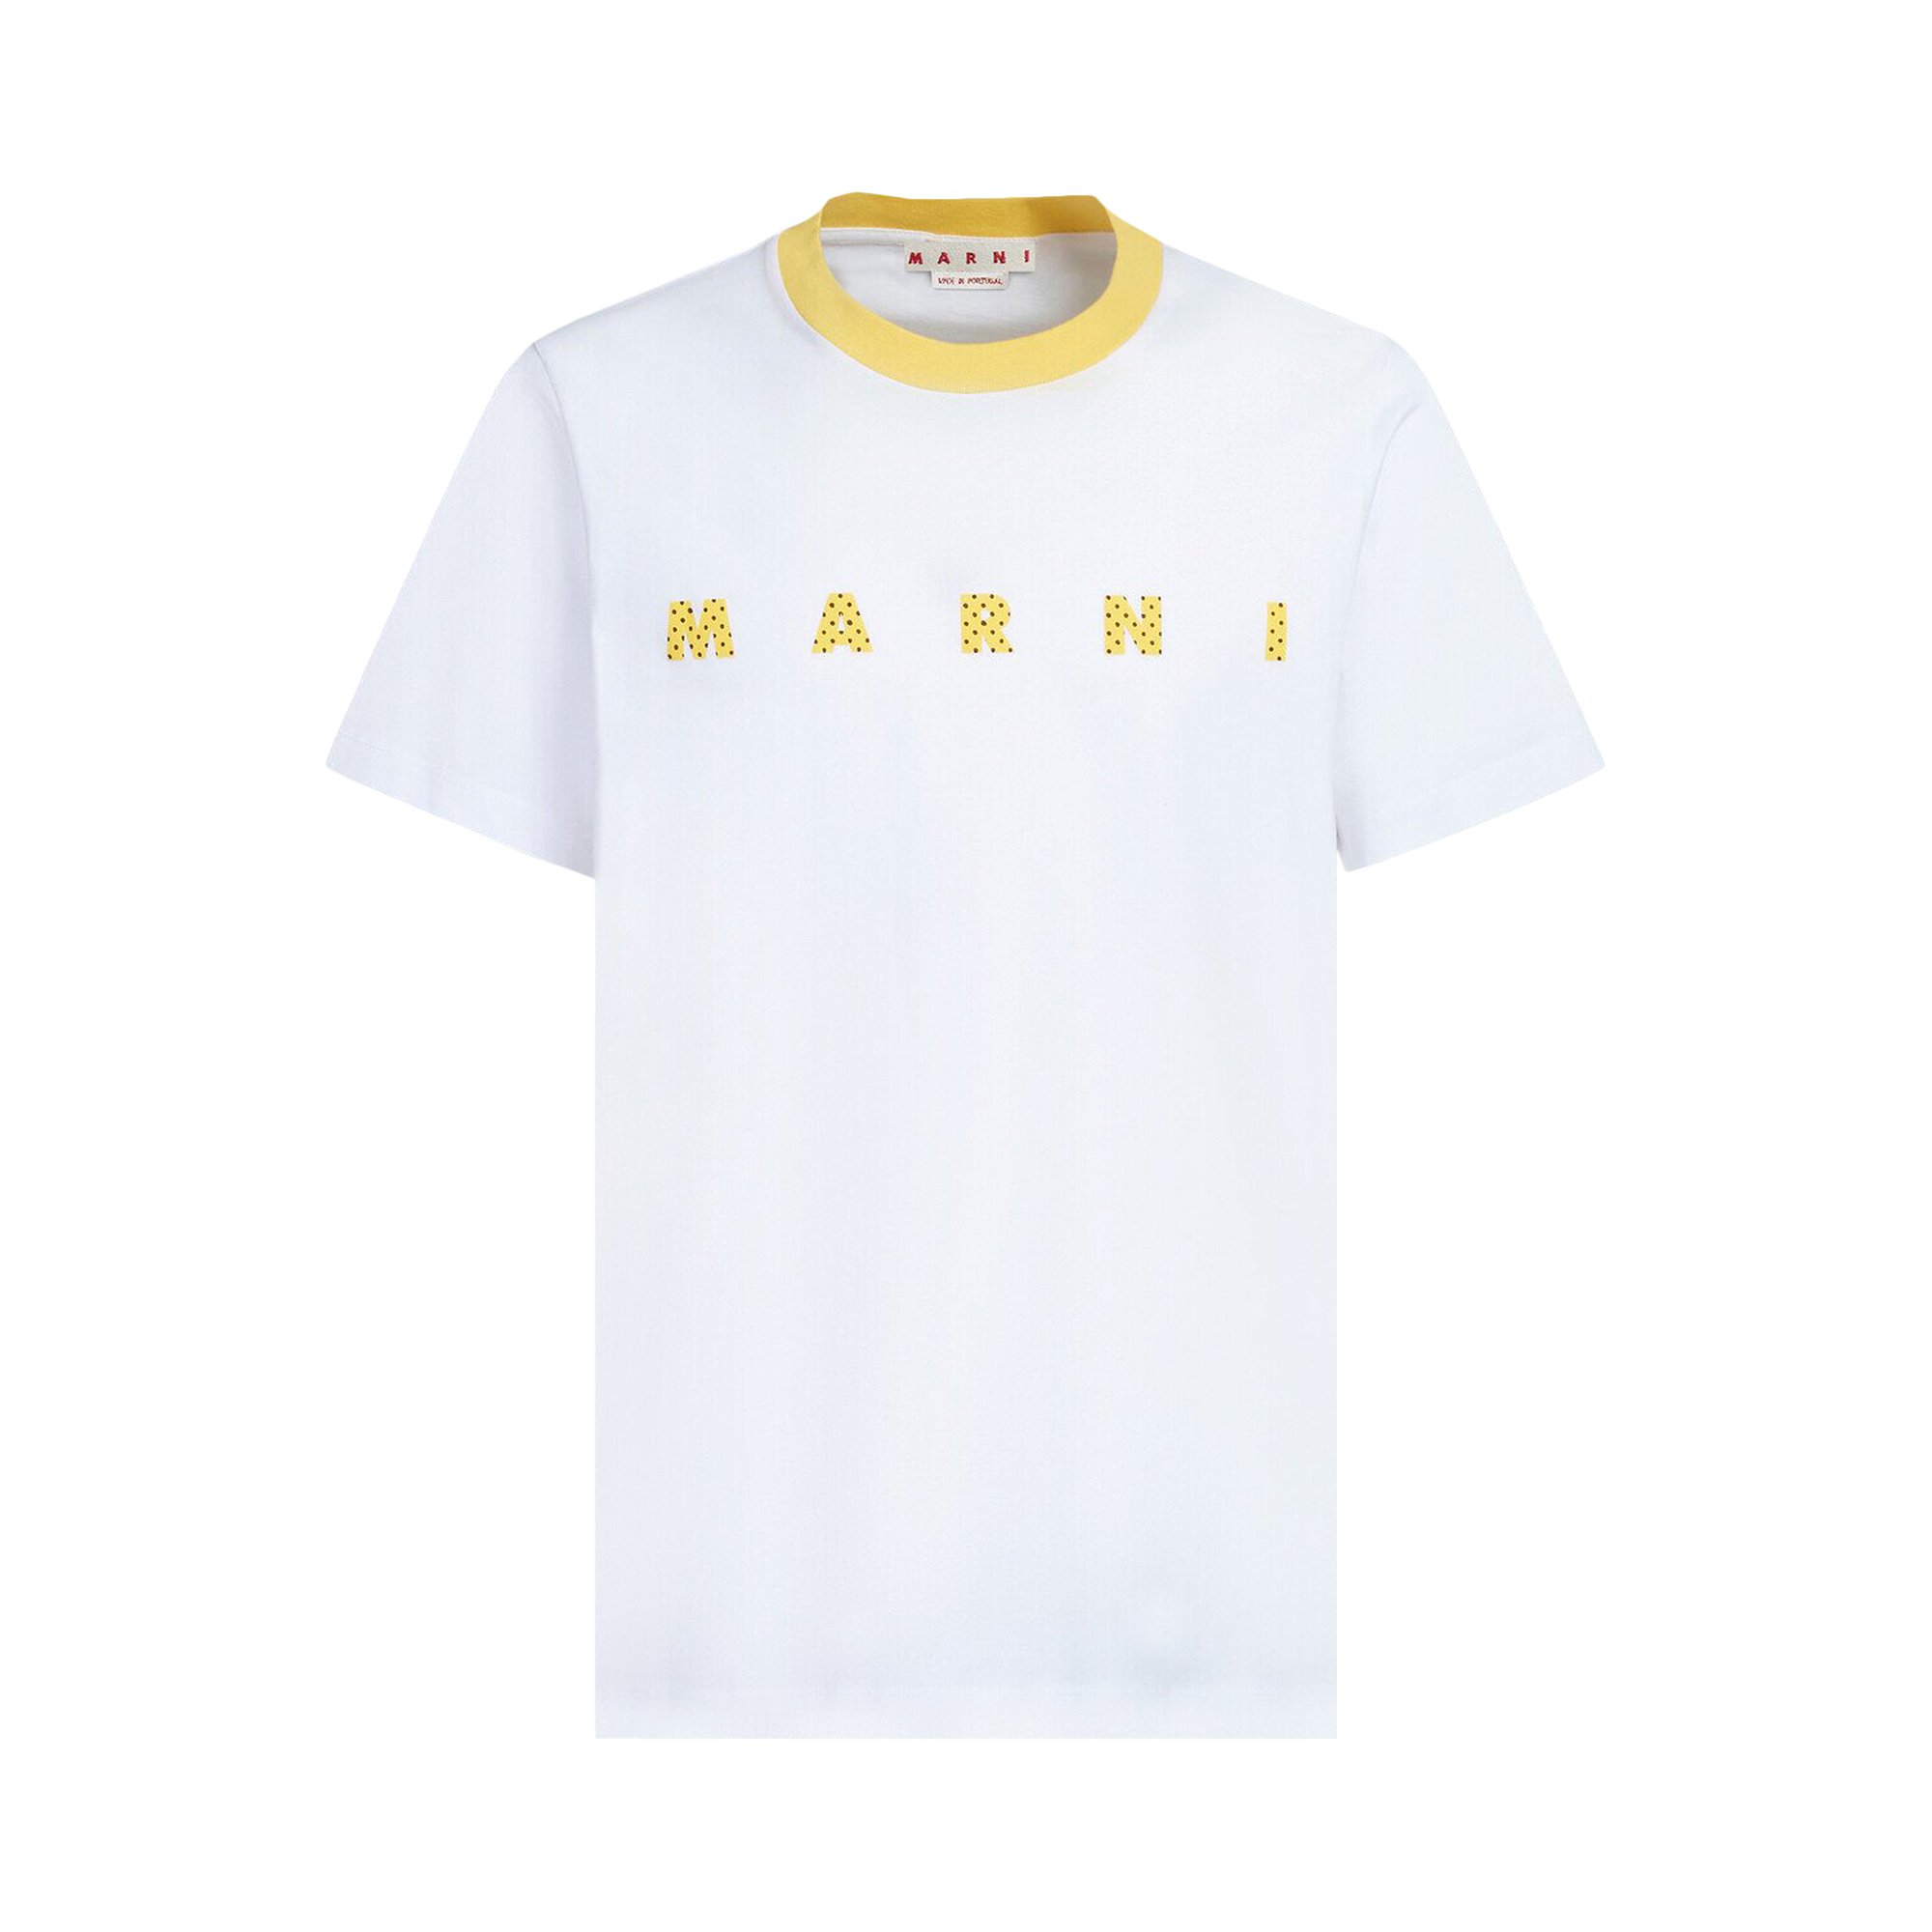 цена Футболка Marni с логотипом в горошек, Белая лилия